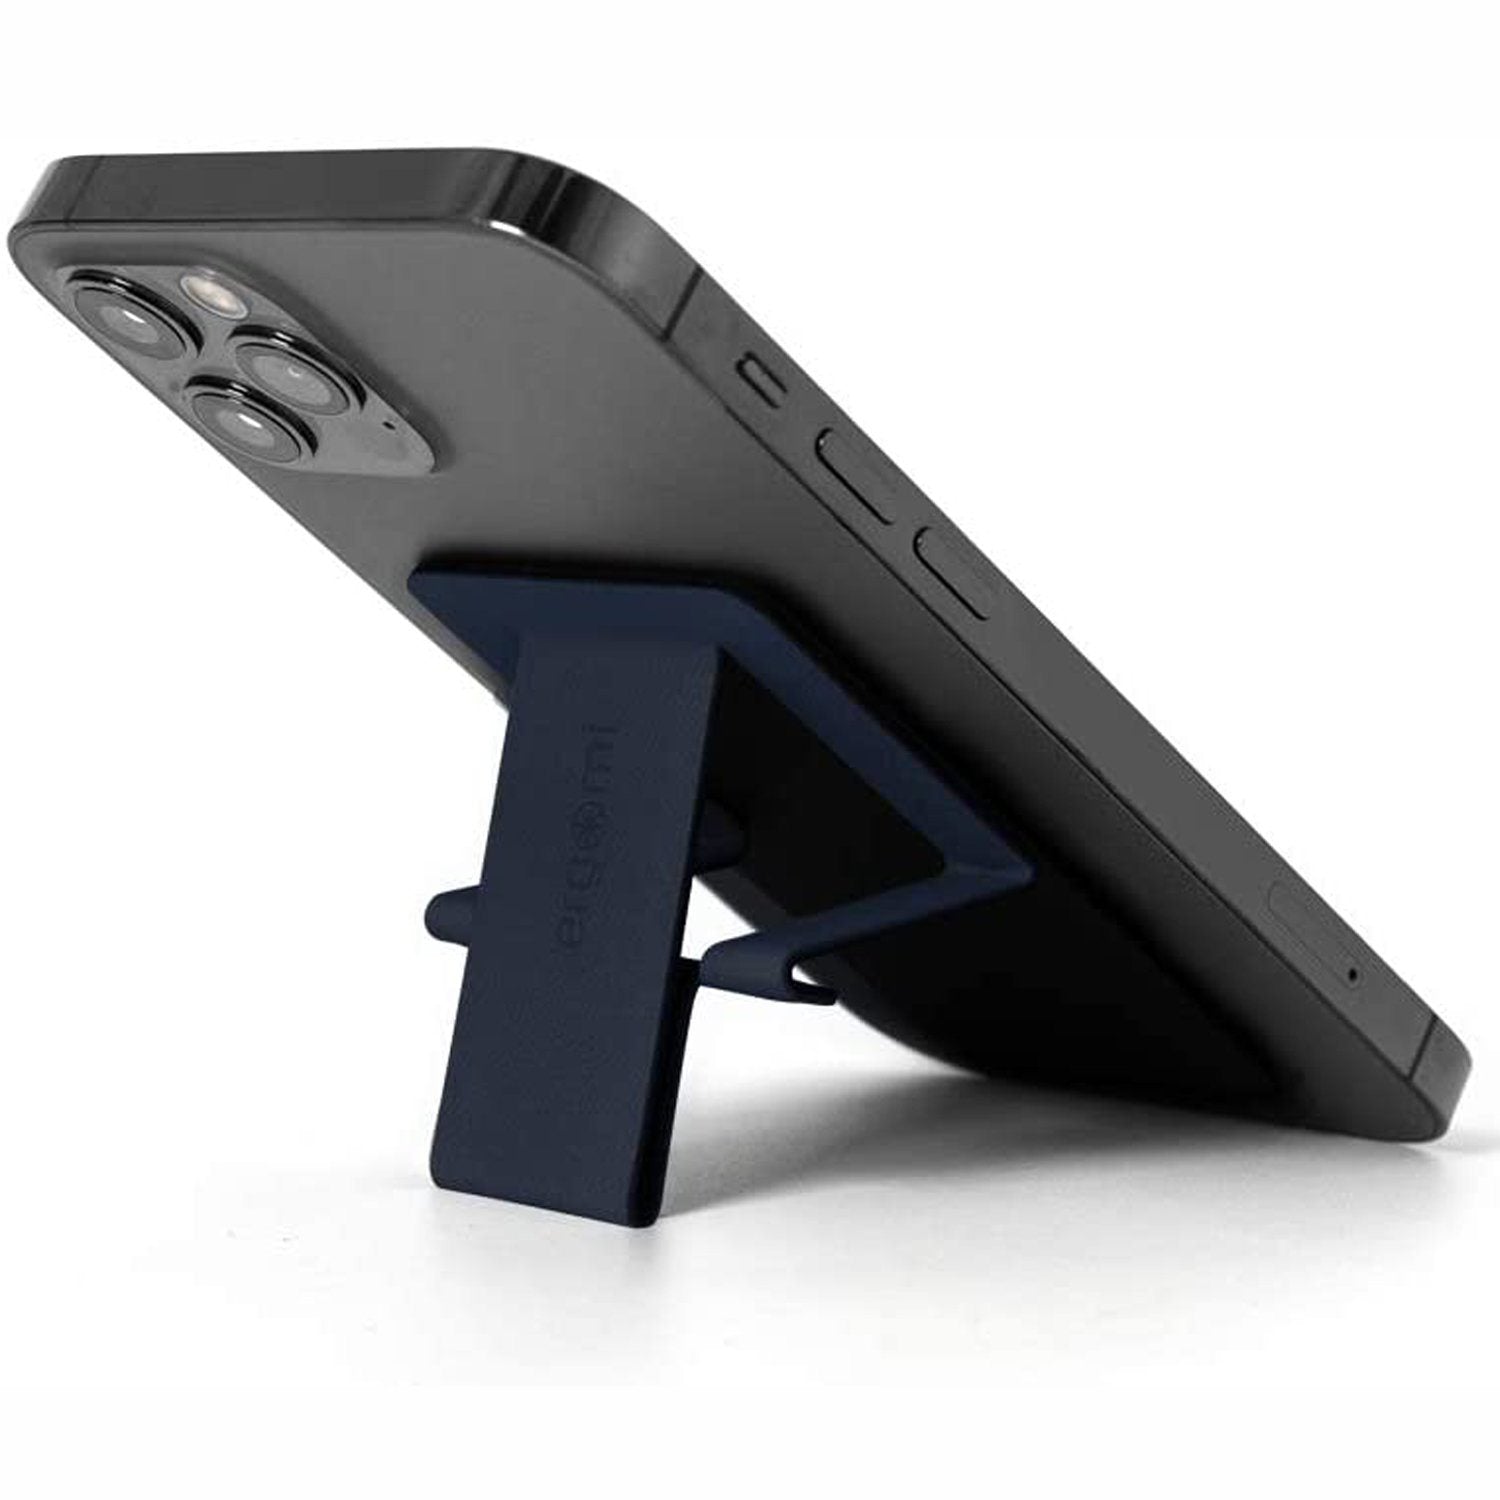 Ergomi Hercules Grip Adhesive Phone Stand, Black Default Ergomi 